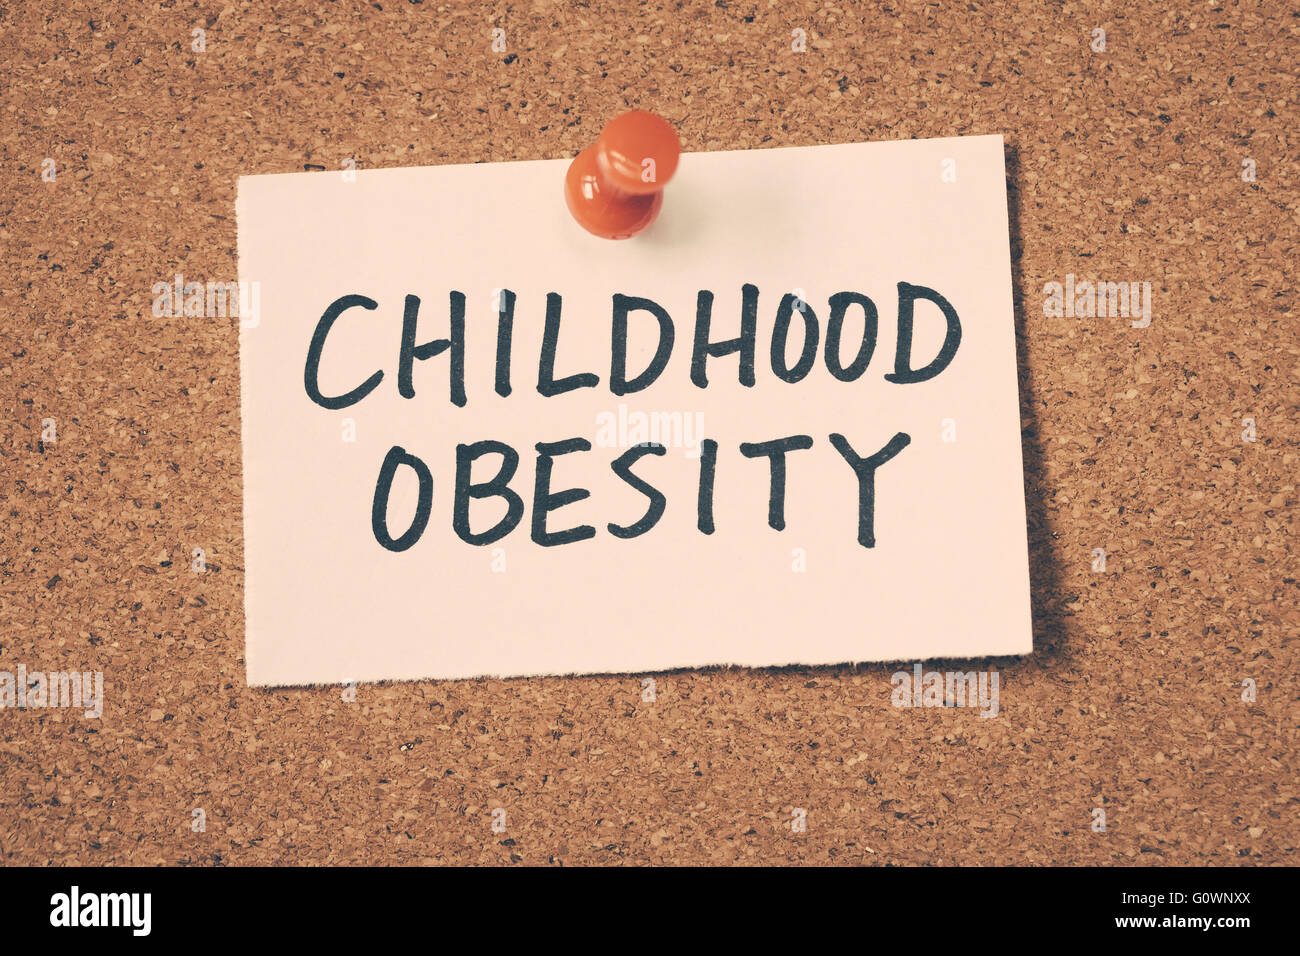 childhood obesity Stock Photo